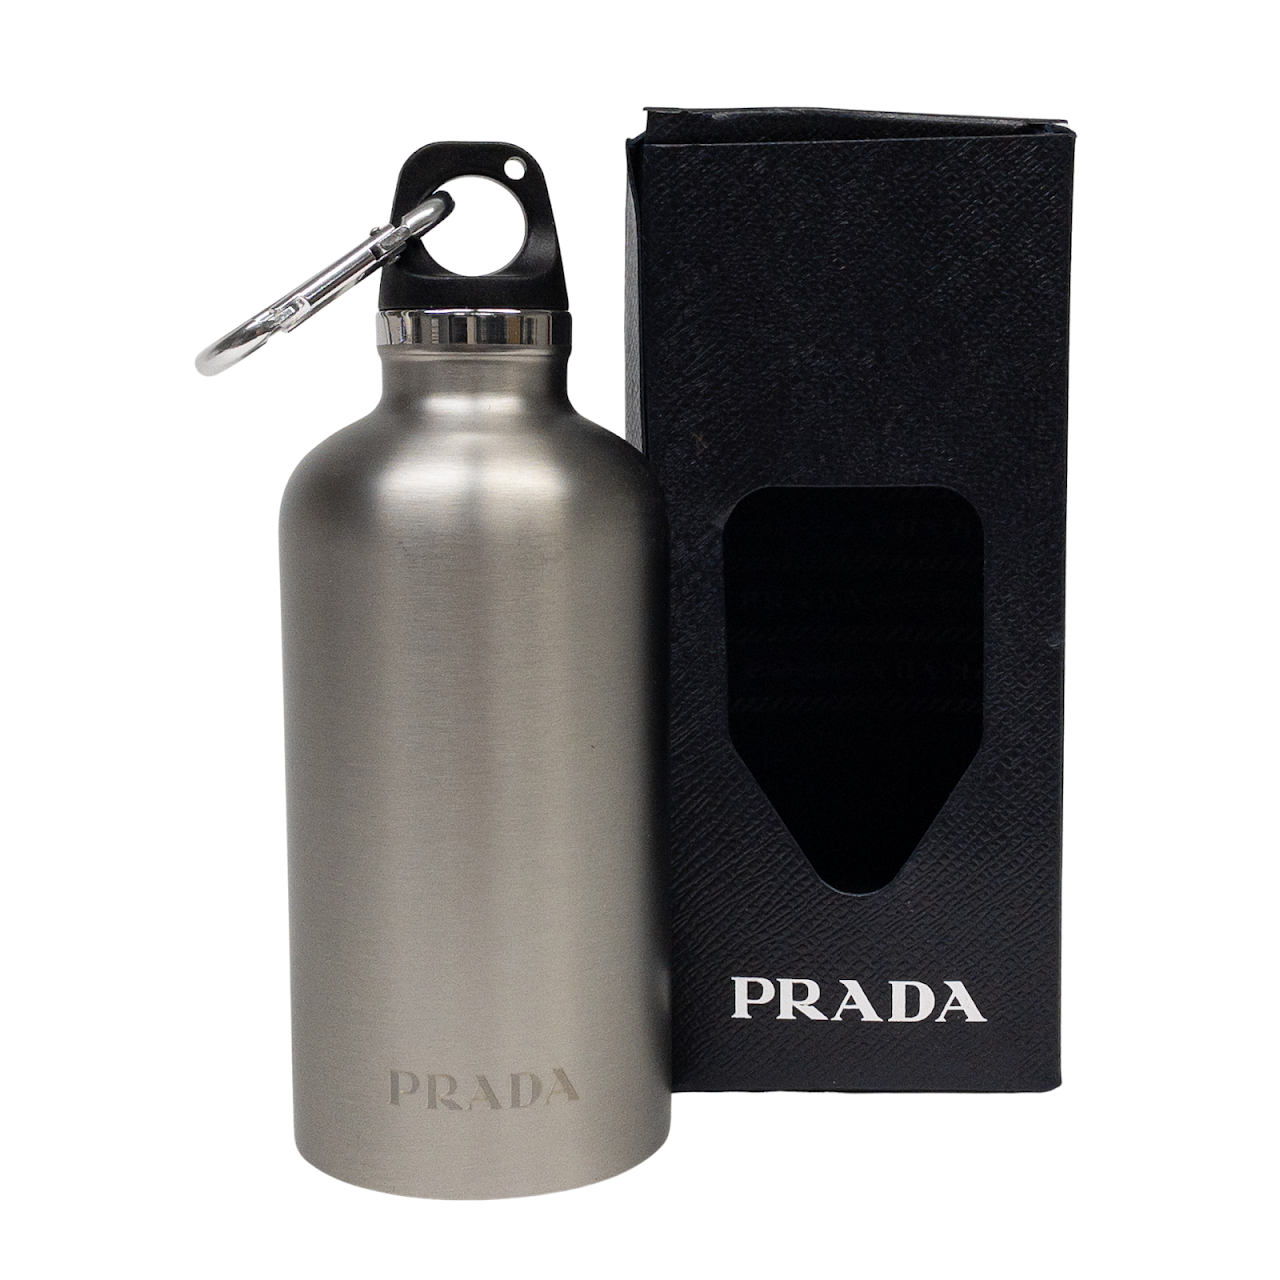 Prada Stainless Steel Insulated Water Bottle, 500 mL, Unisex, Silver